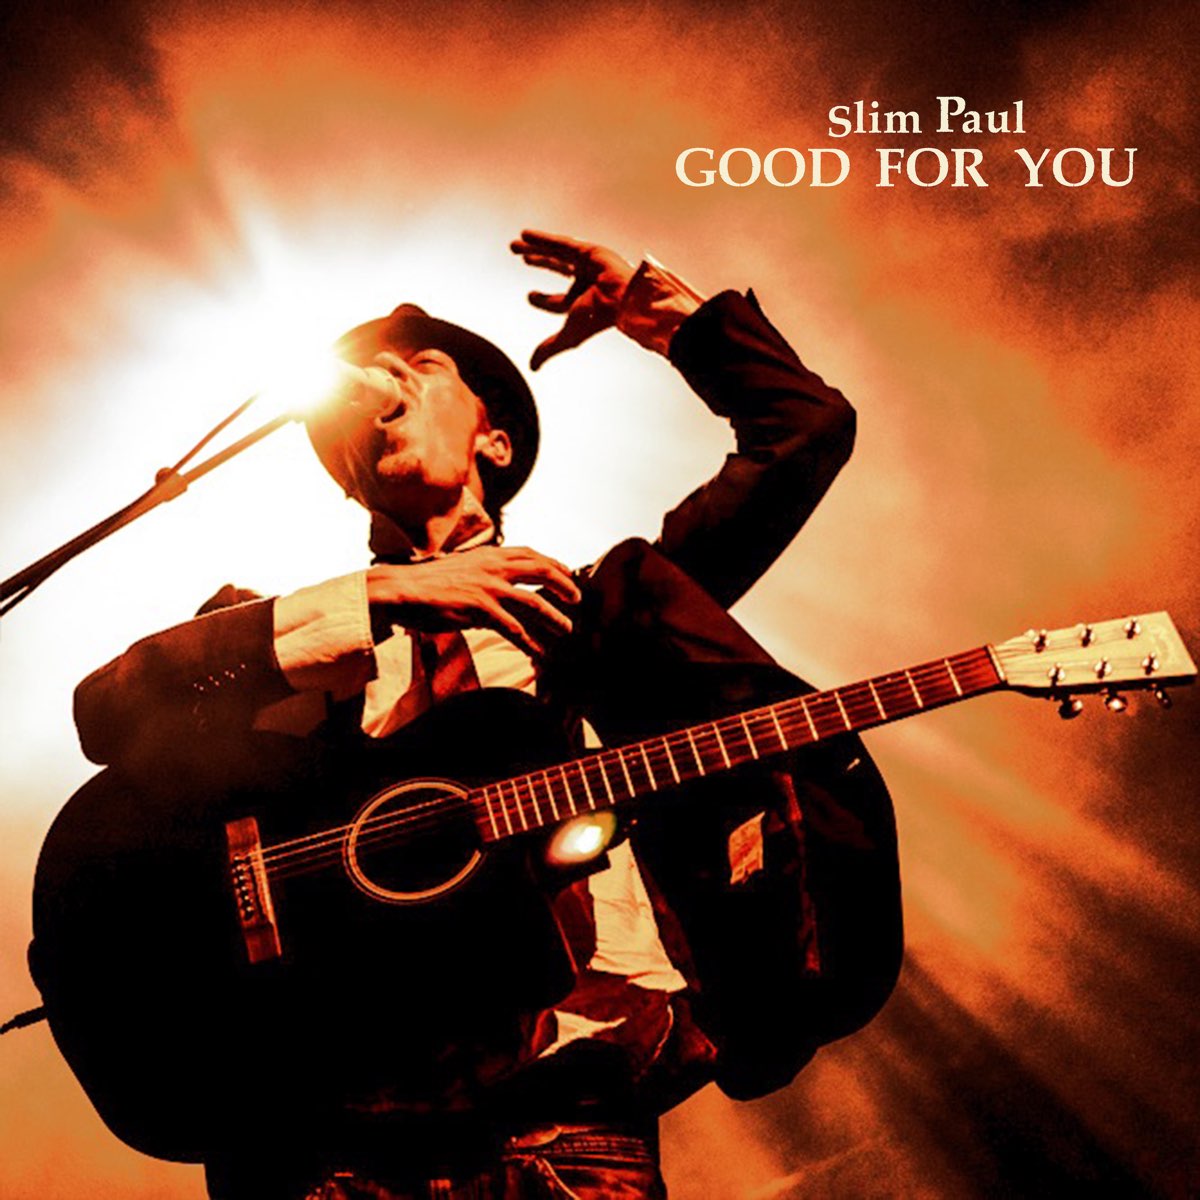 Slim Paul – Good for you